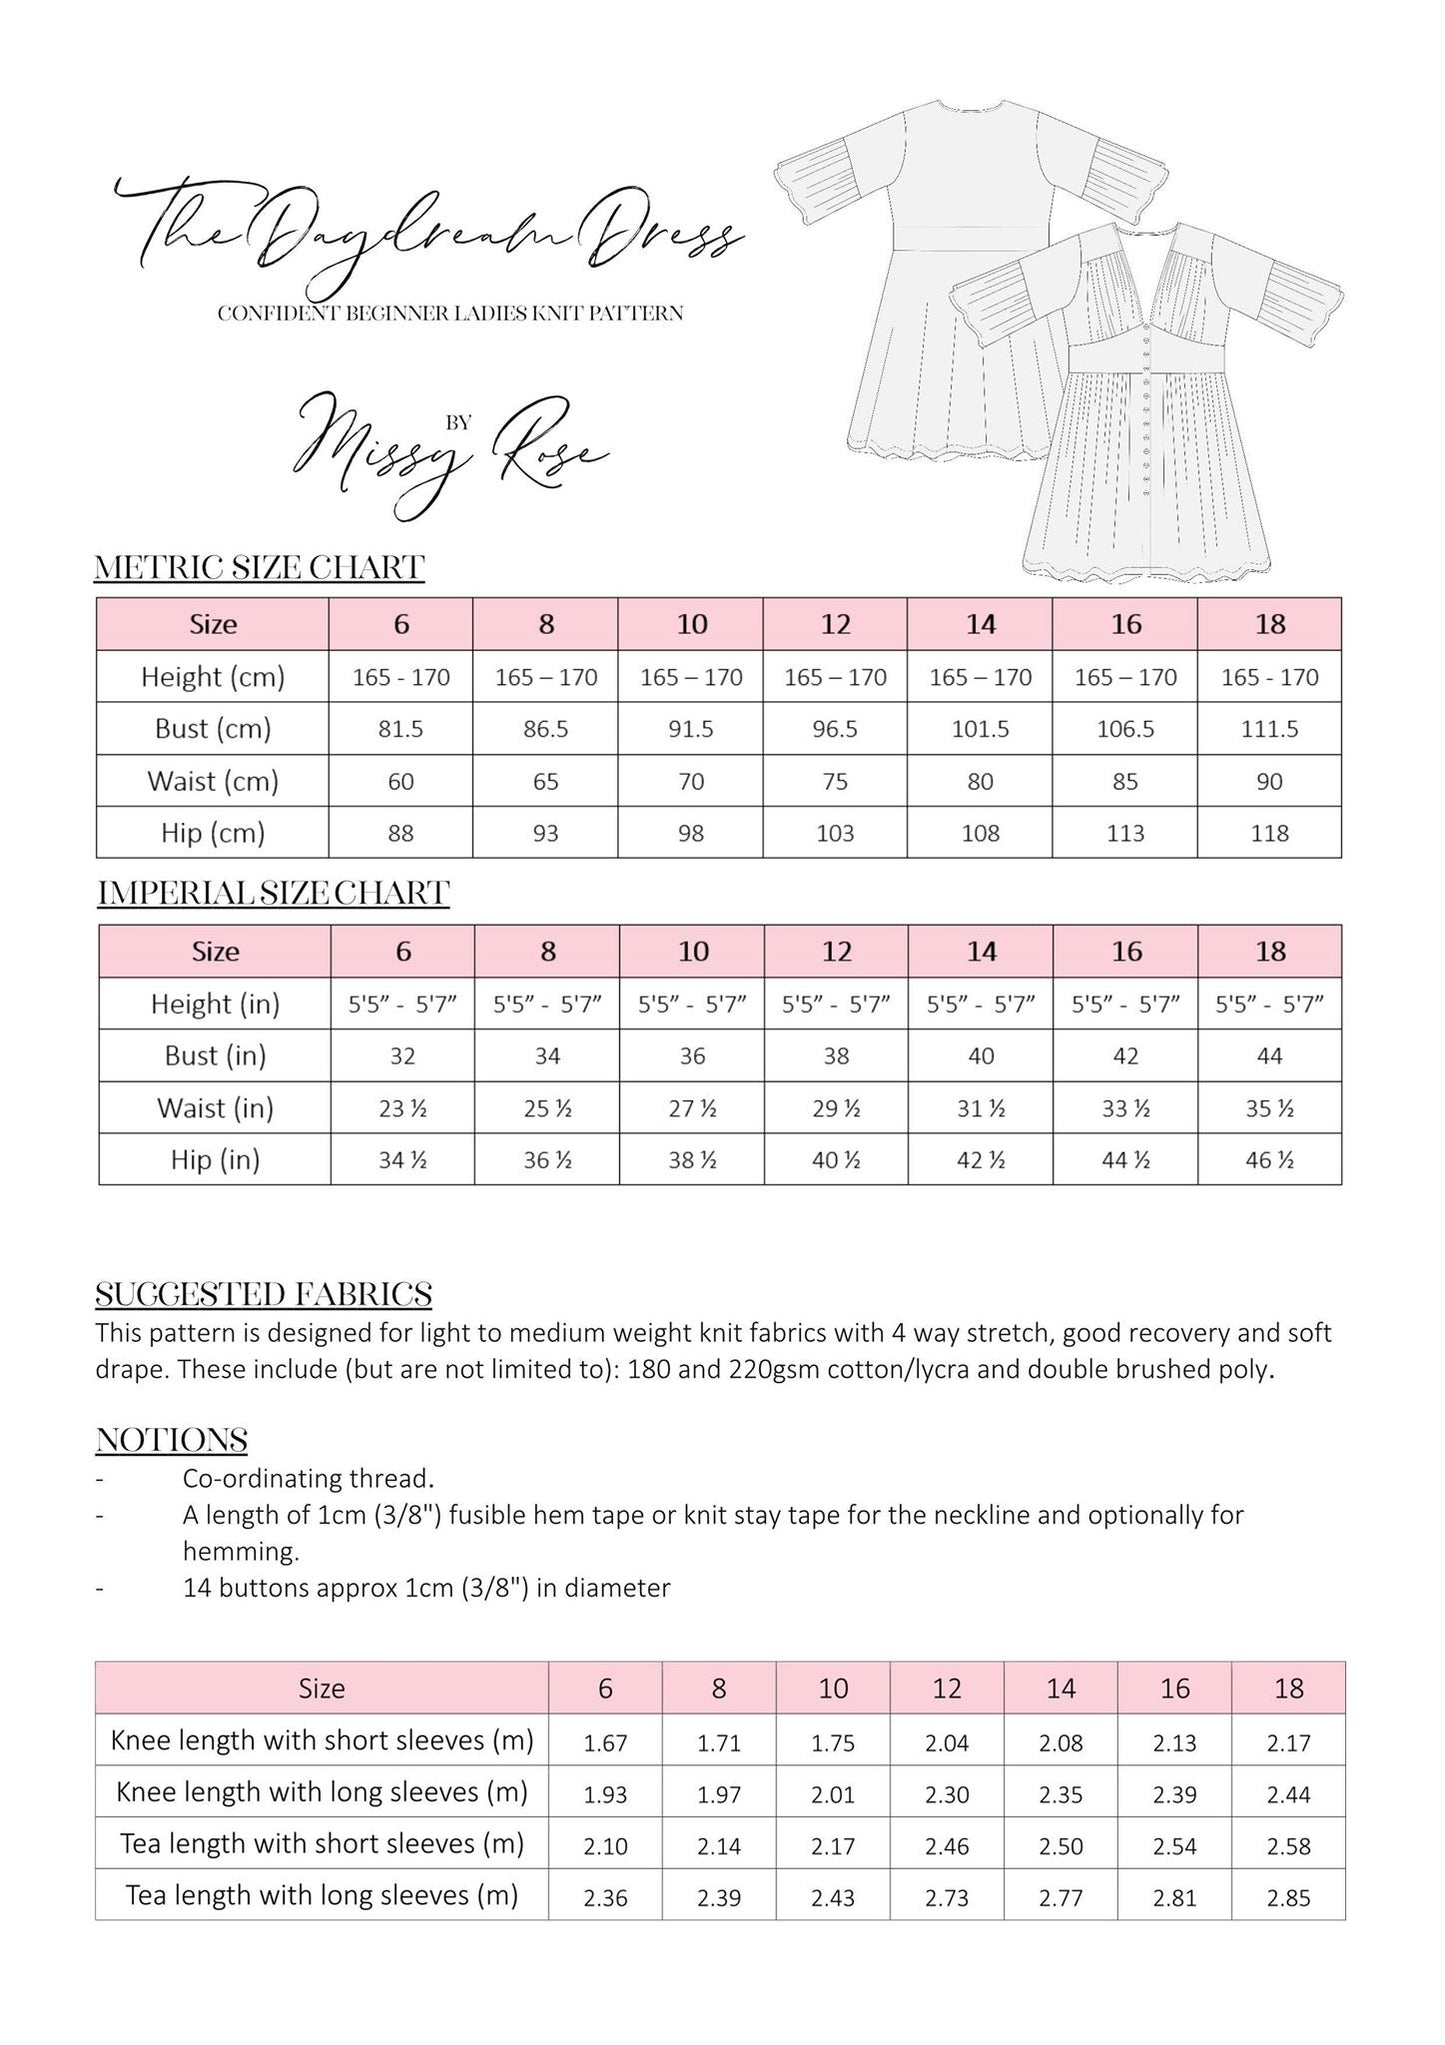 Missy Rose Daydream Dress - Womens PDF Sewing Pattern